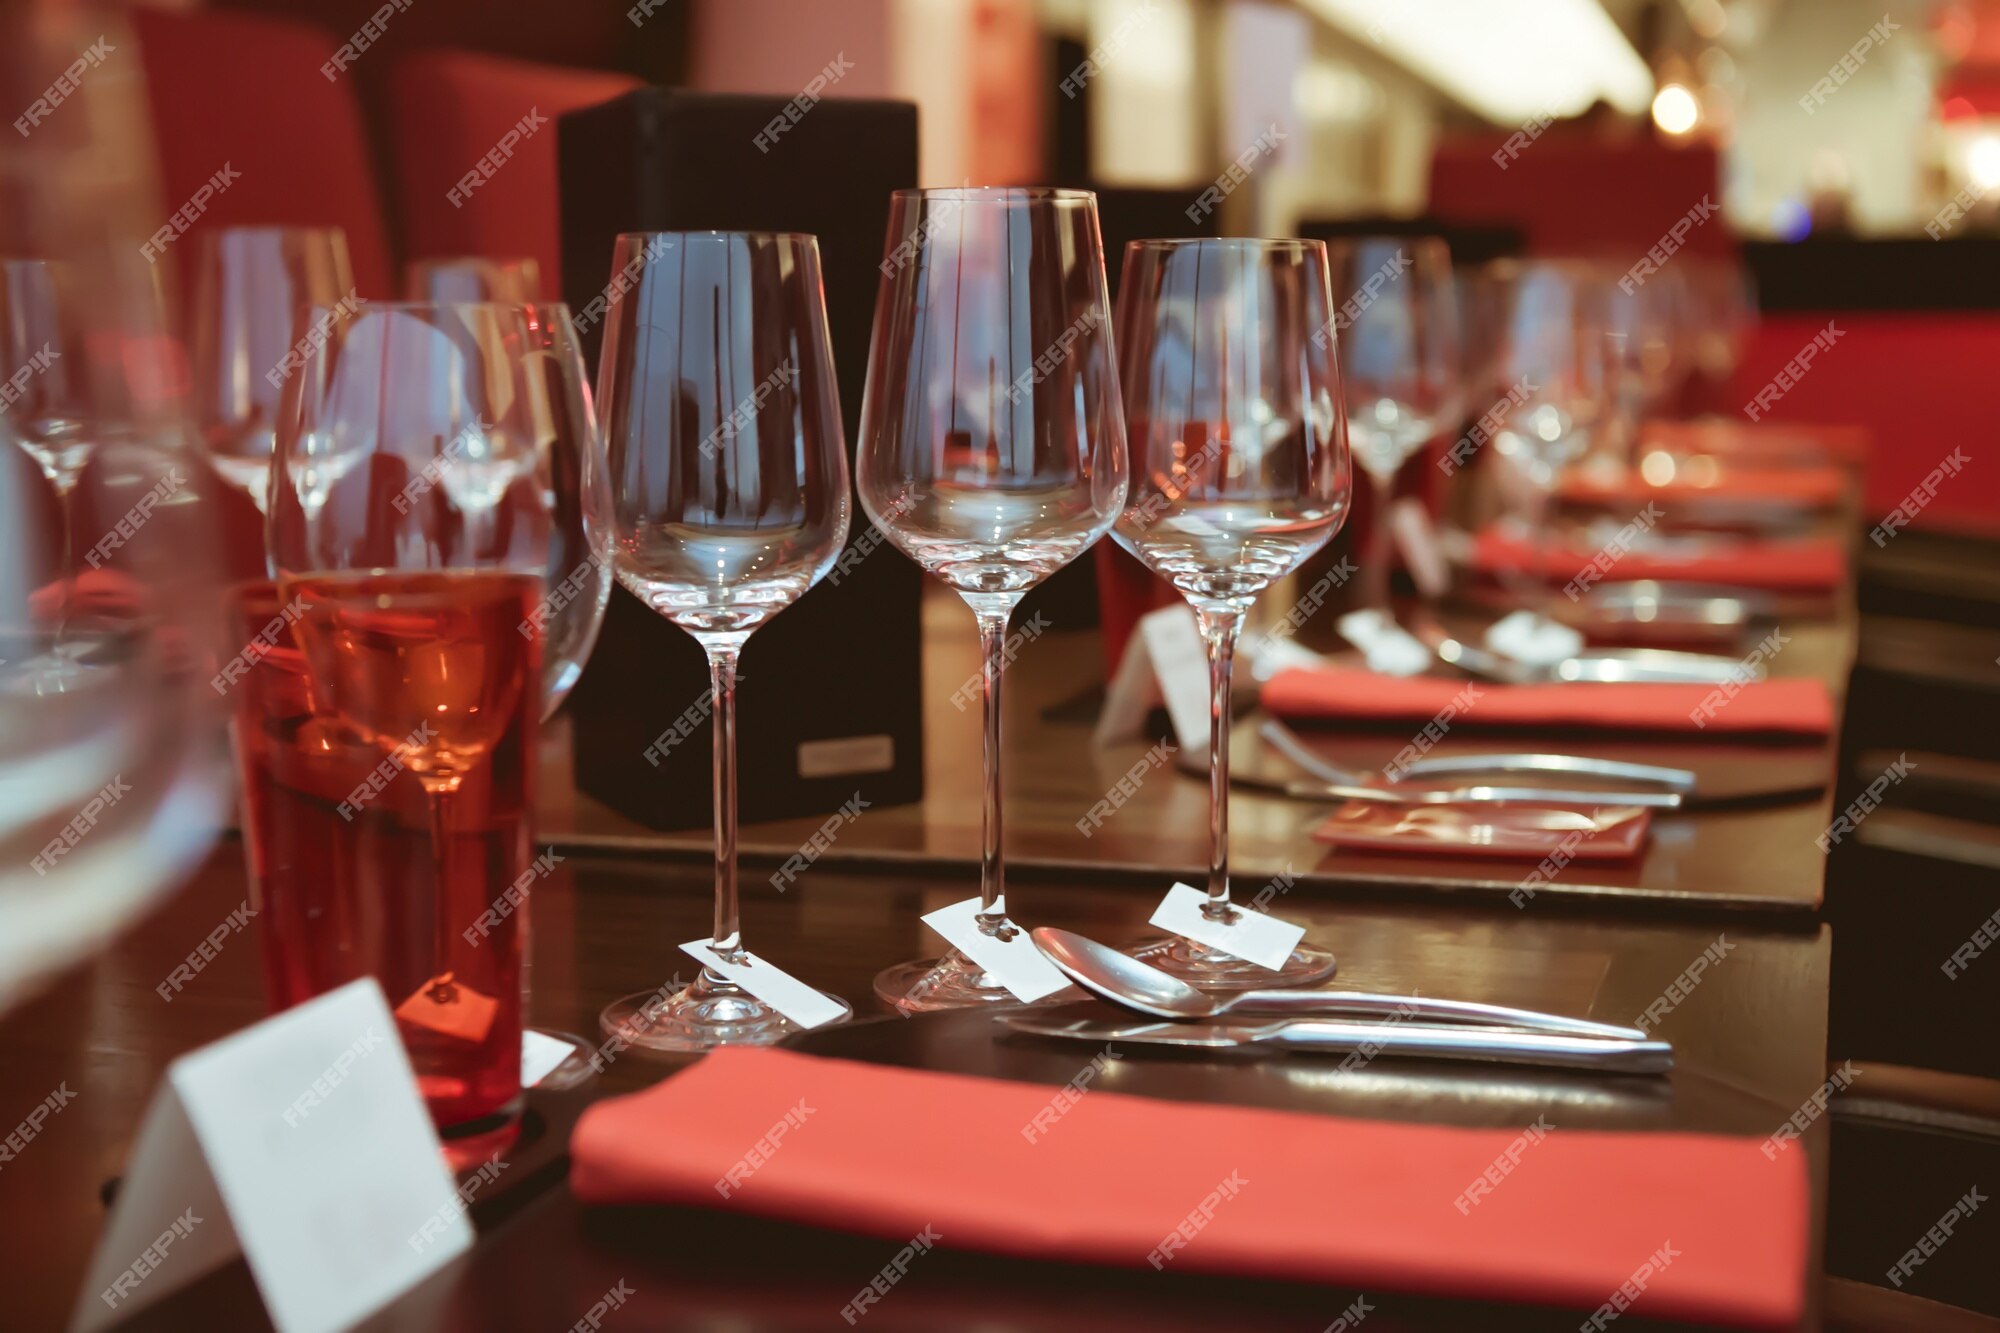 https://img.freepik.com/premium-photo/wine-glass-setup-dinner-table-luxury-dinner-party-with-vintage-color-style_2313-1015.jpg?w=2000